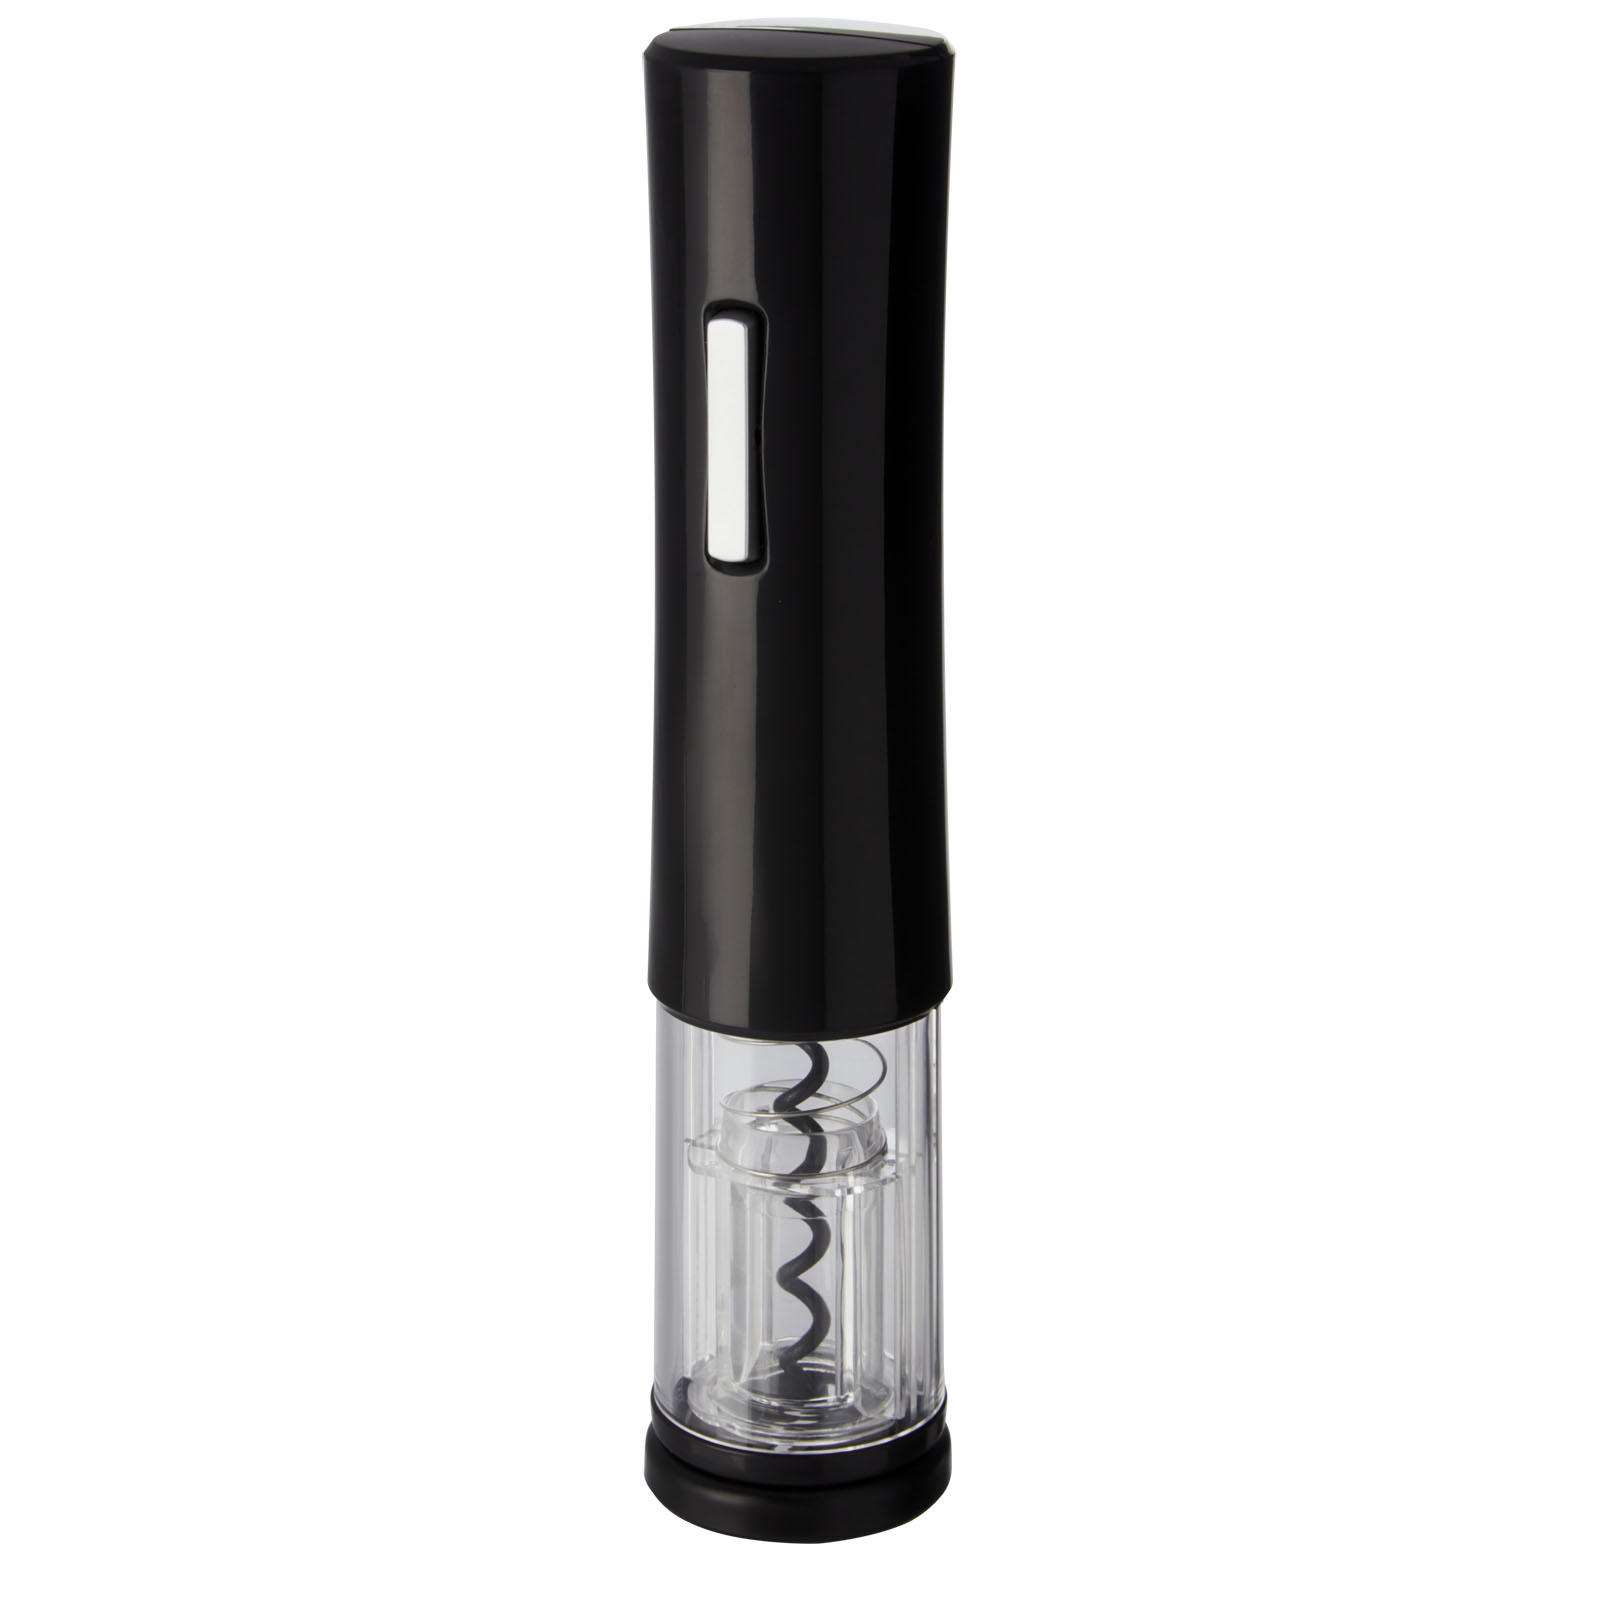 Electric wine bottle opener BENTREE - solid black